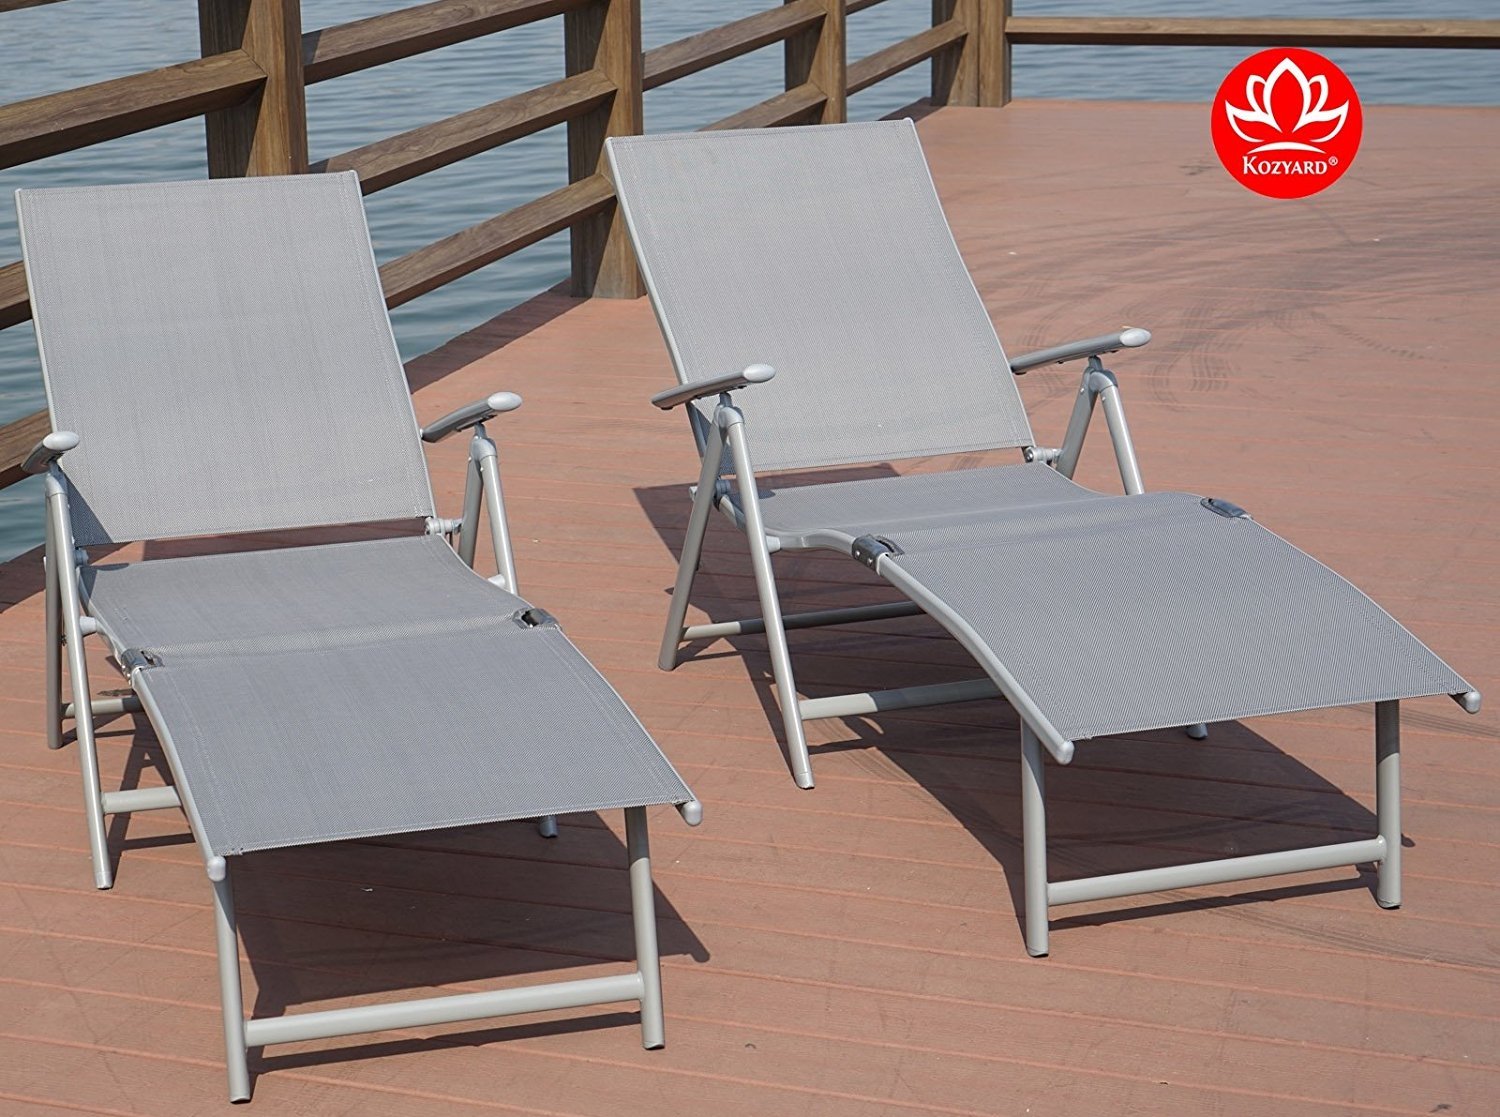 Kozyard Aluminum Beach Yard Pool Adjustable Chaise Lounge Chair ( Gray, 2 Packs) - image 1 of 7